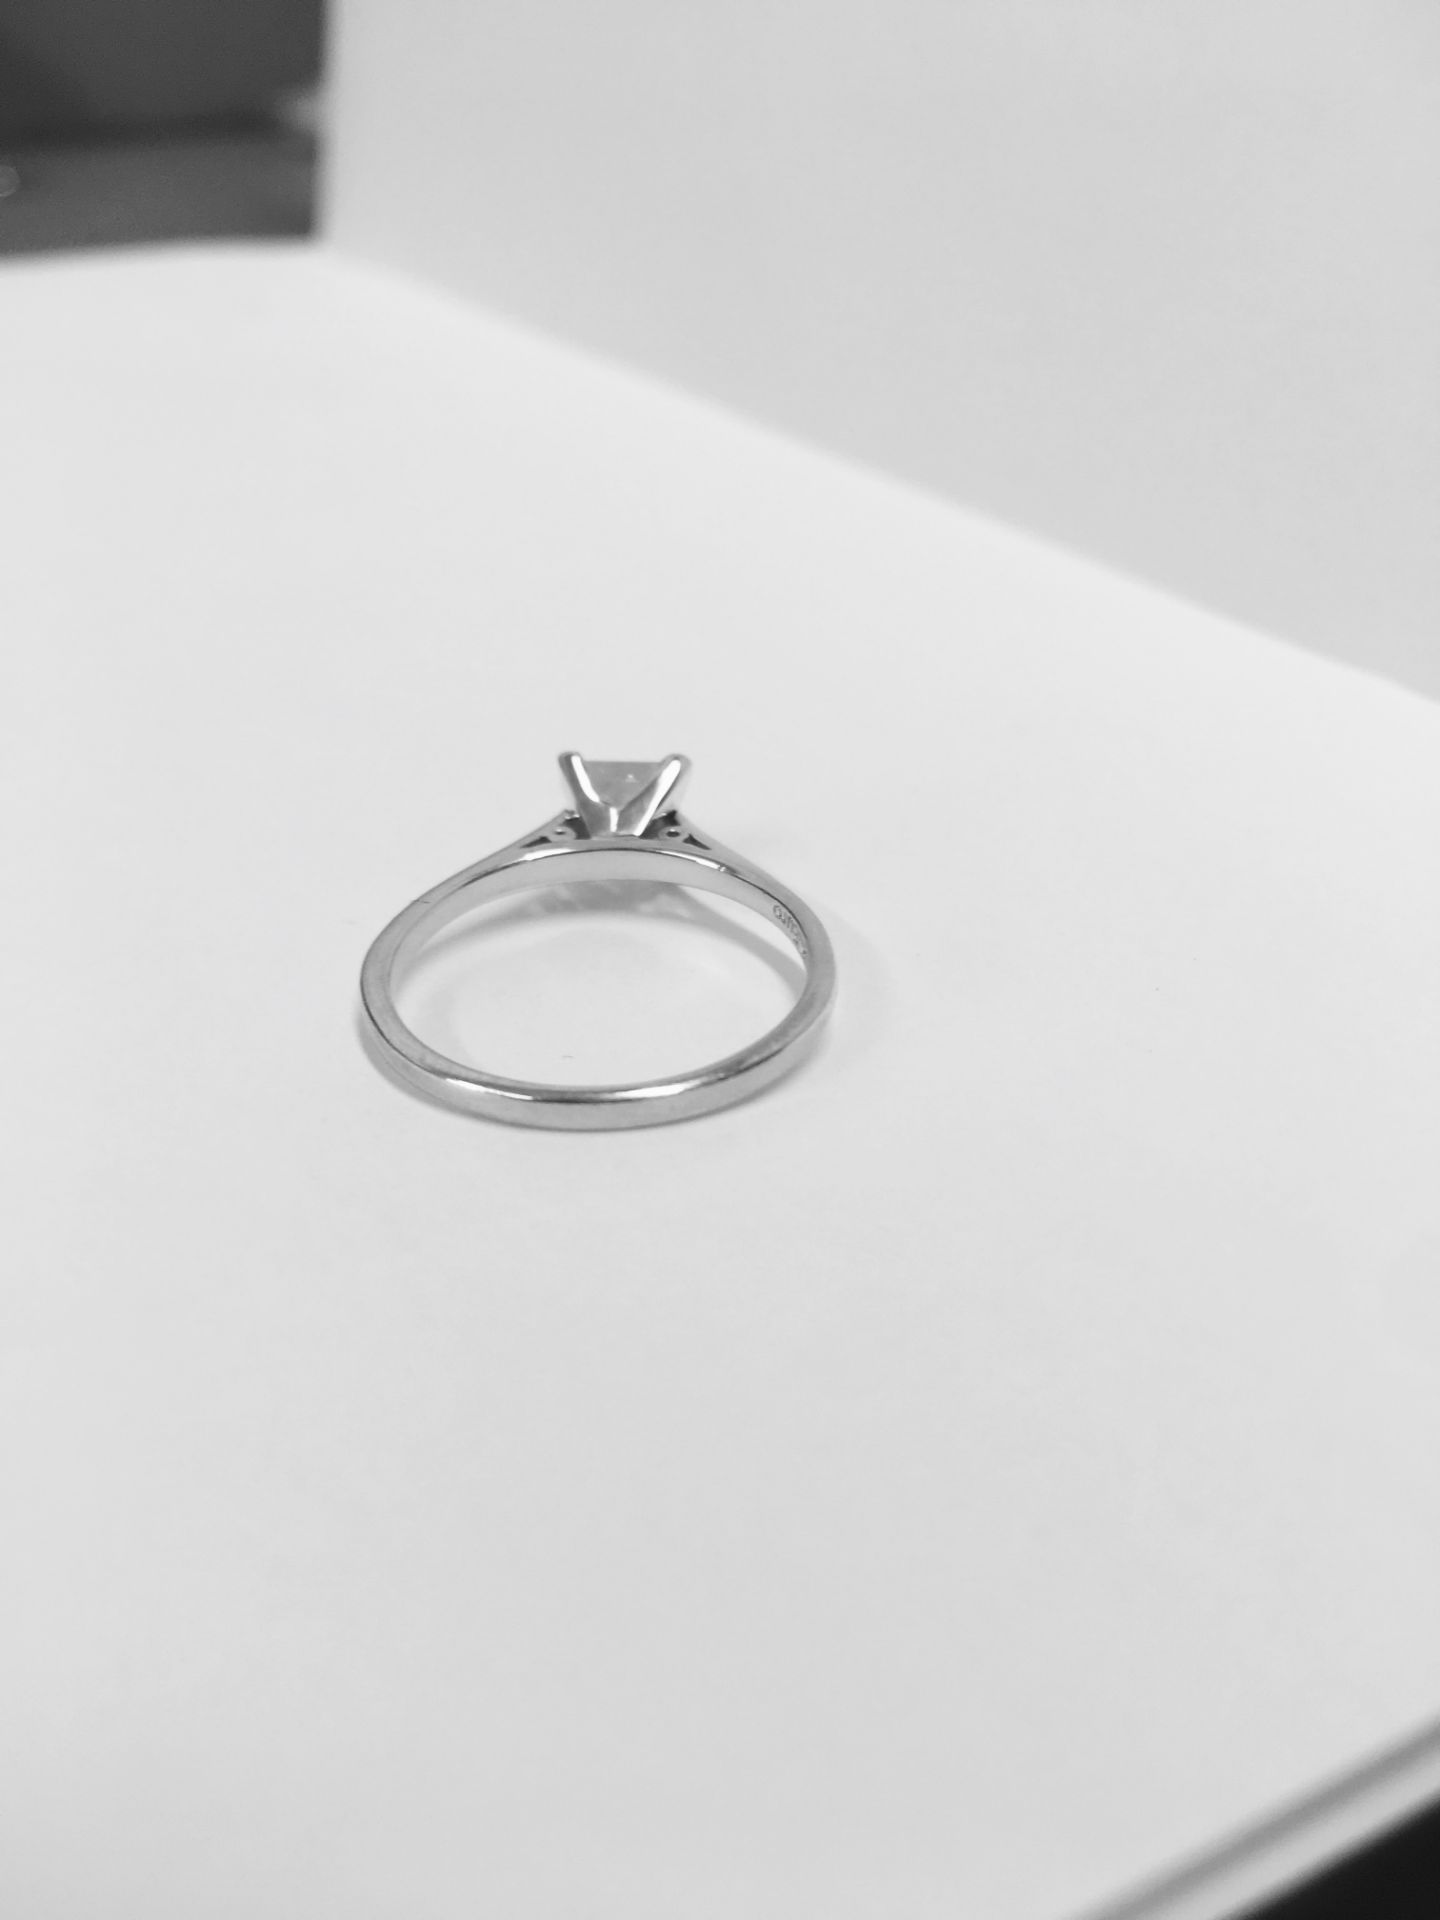 1ct Princess cut diamond solitaire ring,1ct princess cut h colour i2 clarity (enhanced),2.9gms - Image 3 of 6